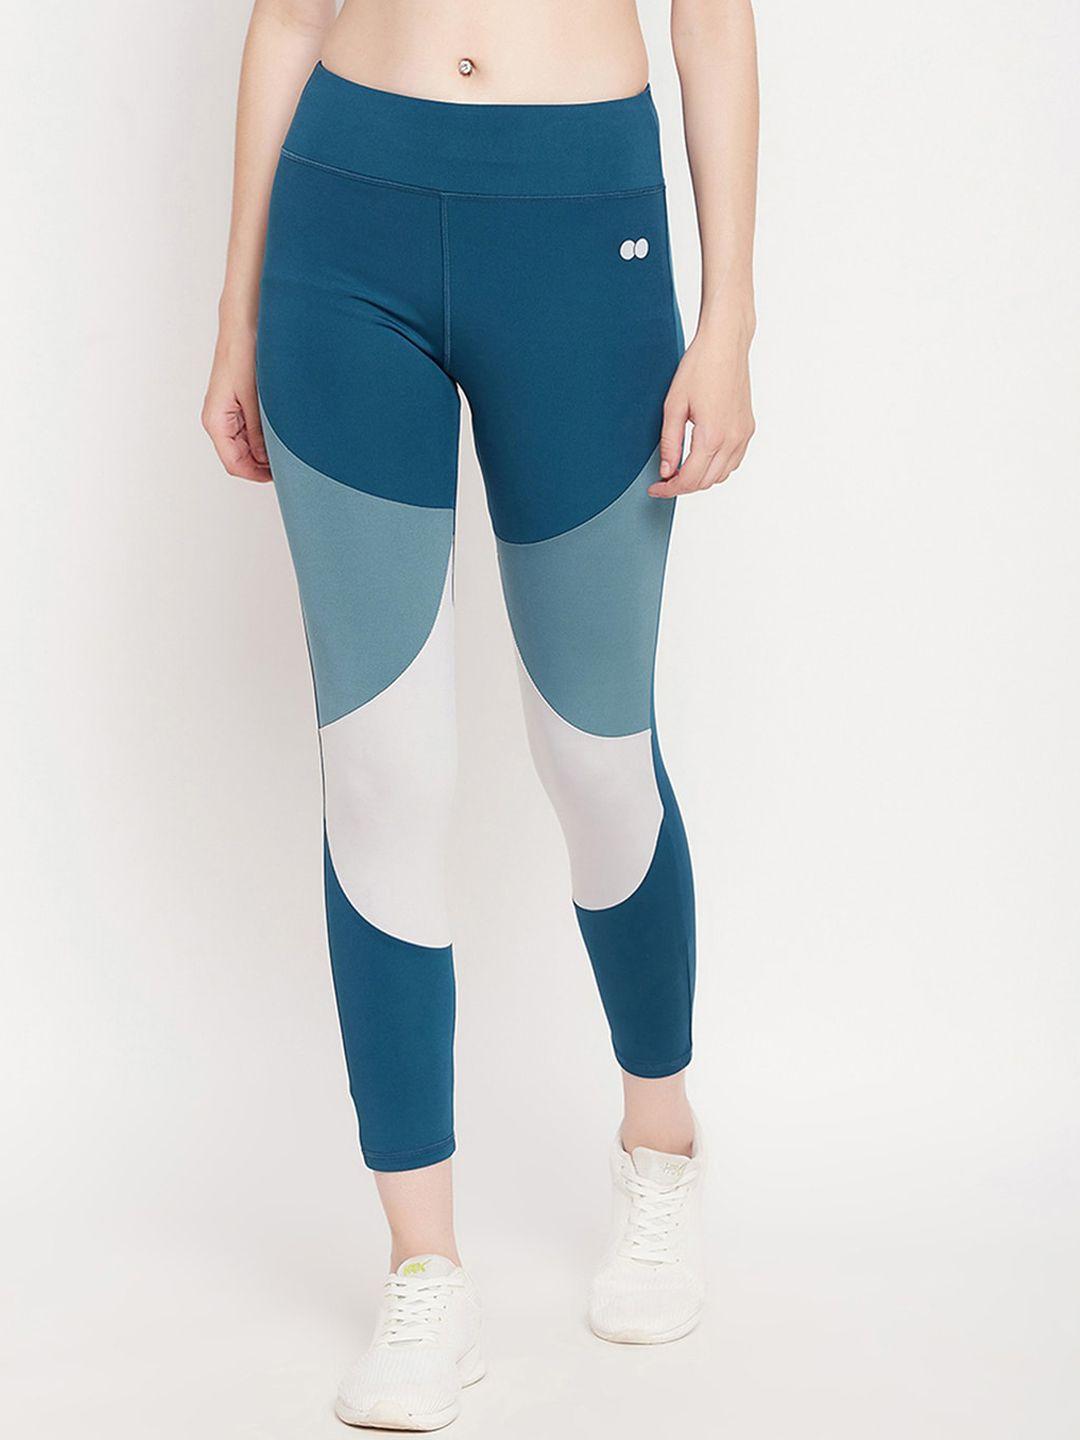 clovia-women-colourblocked-snug-fit-high-rise-active-tights